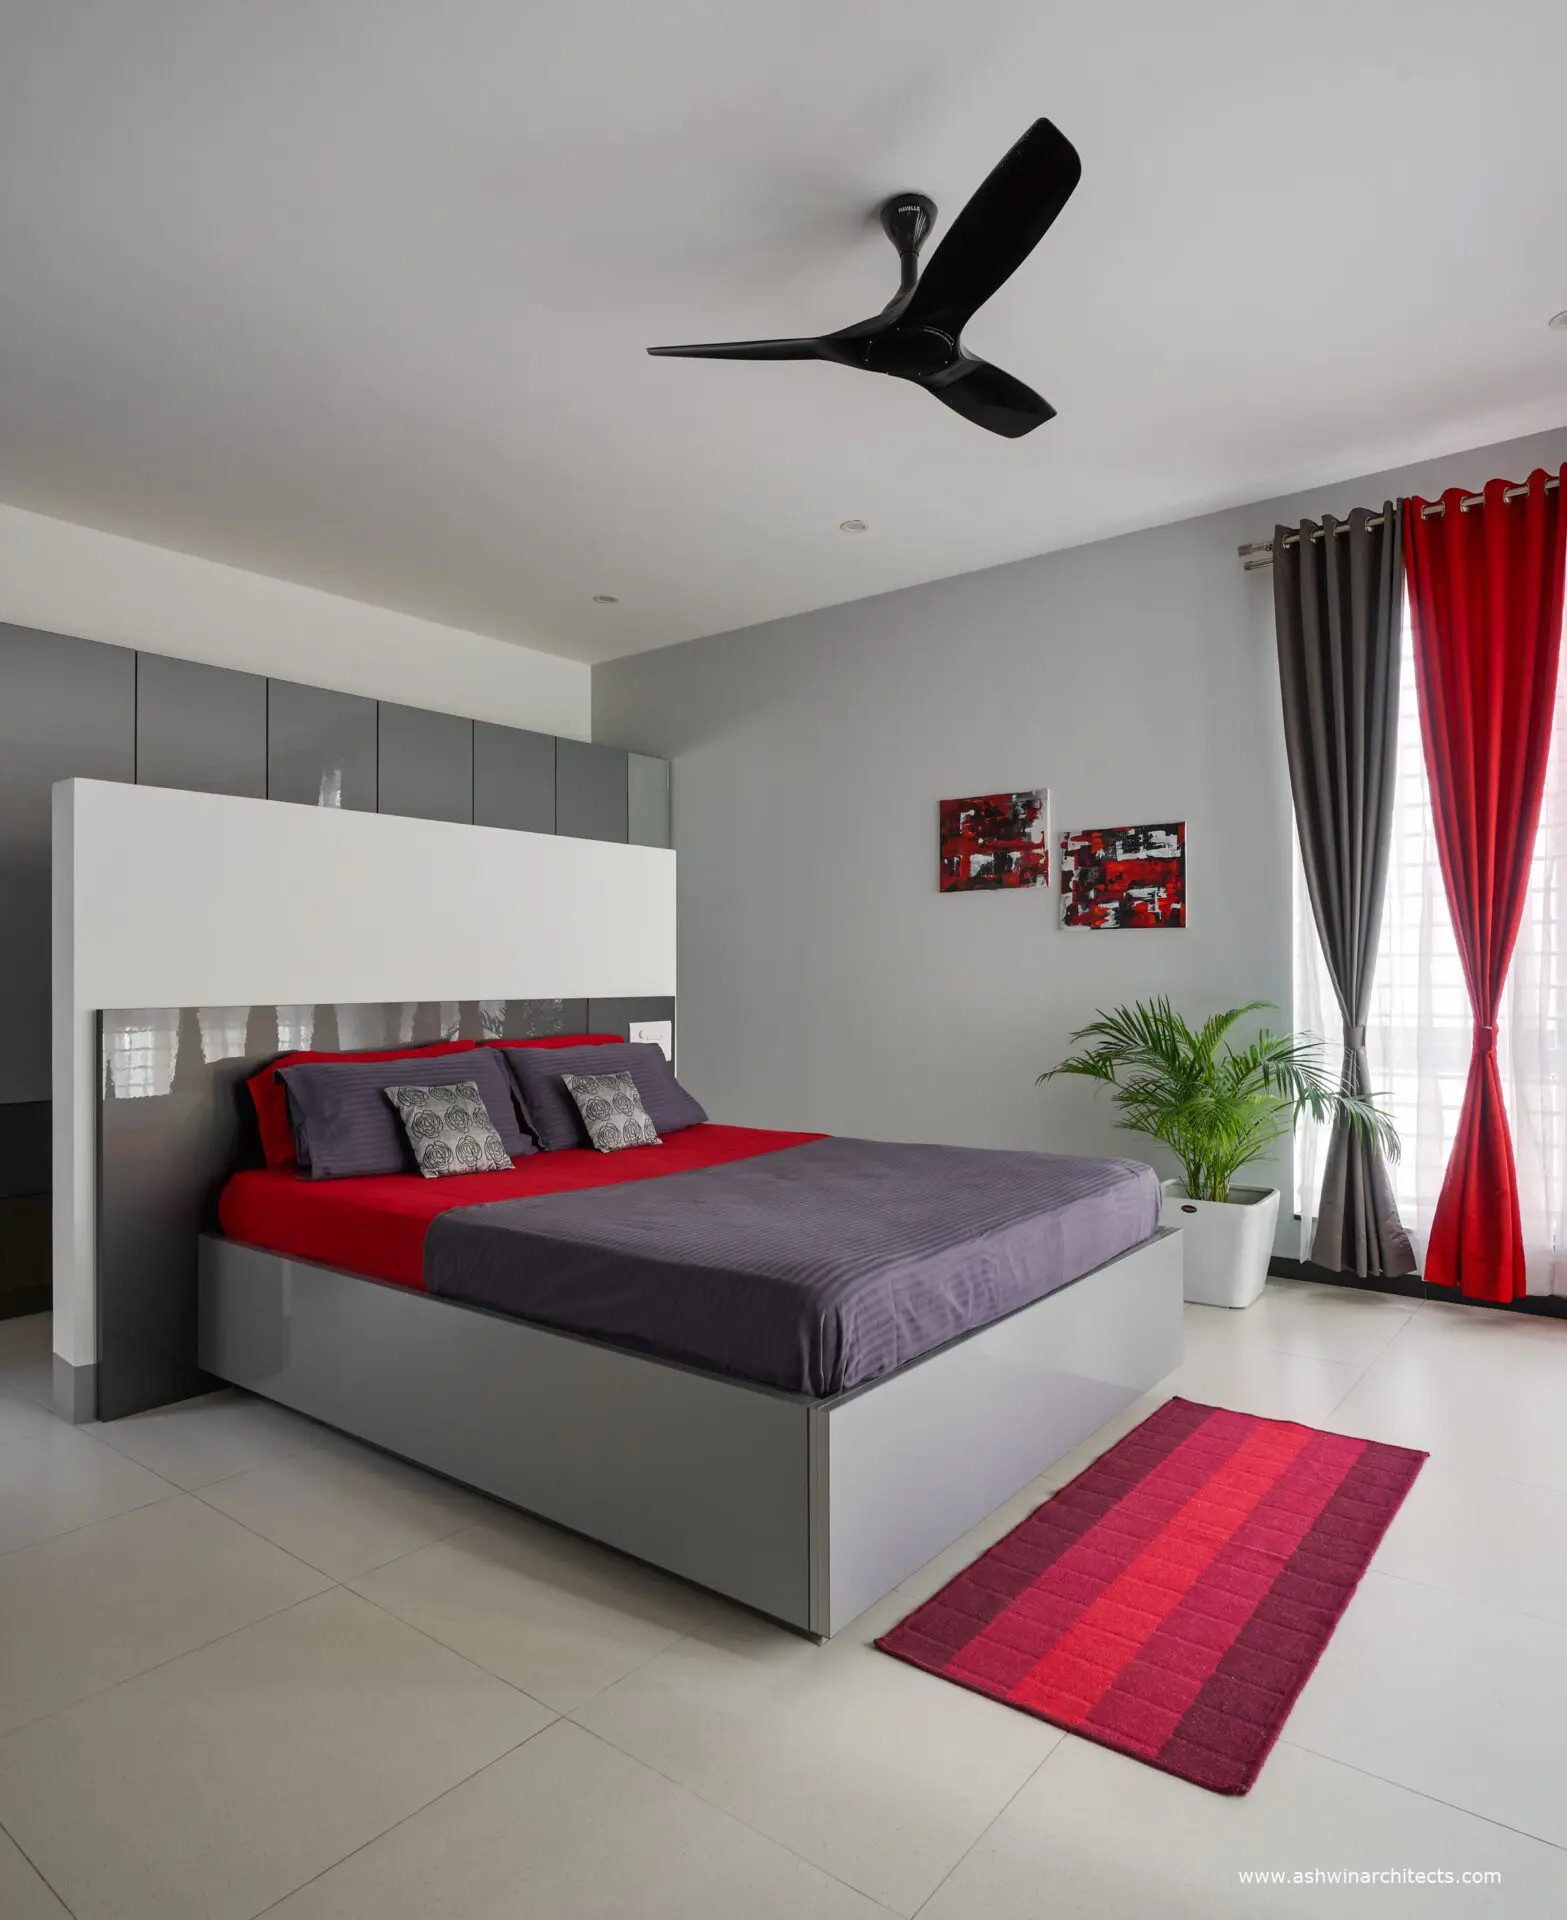 40x60-plot-Bedroom-Kailash-Residence-40-x-60-Plot-3BHK-Duplex-Bungalow-3500-sft.-Family-Home-Design